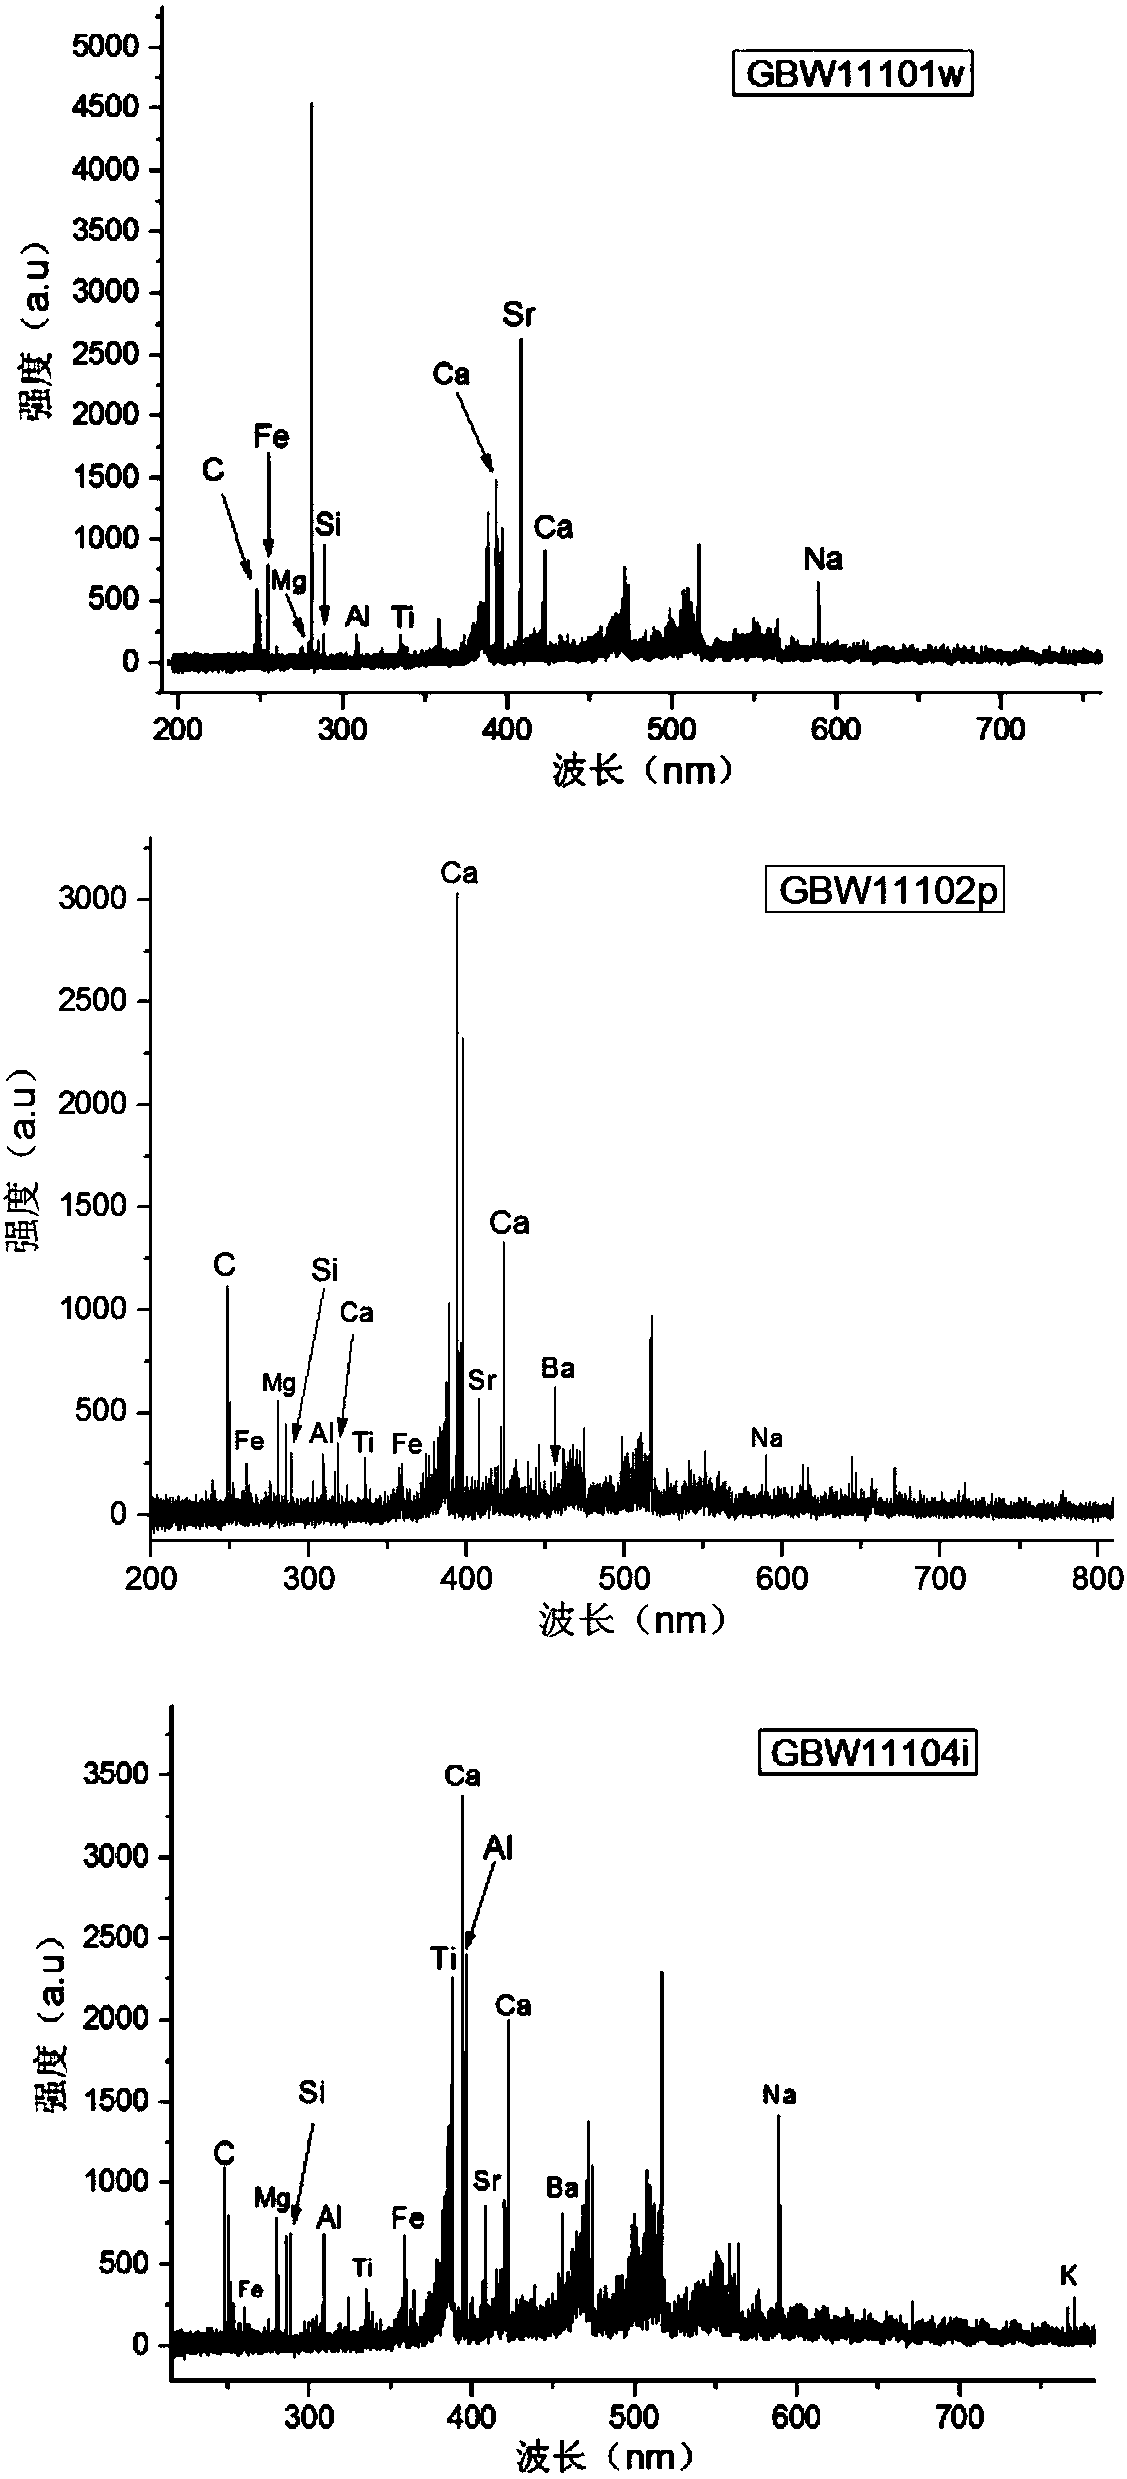 Pulverized coal classification method based on laser induced breakdown spectroscopy